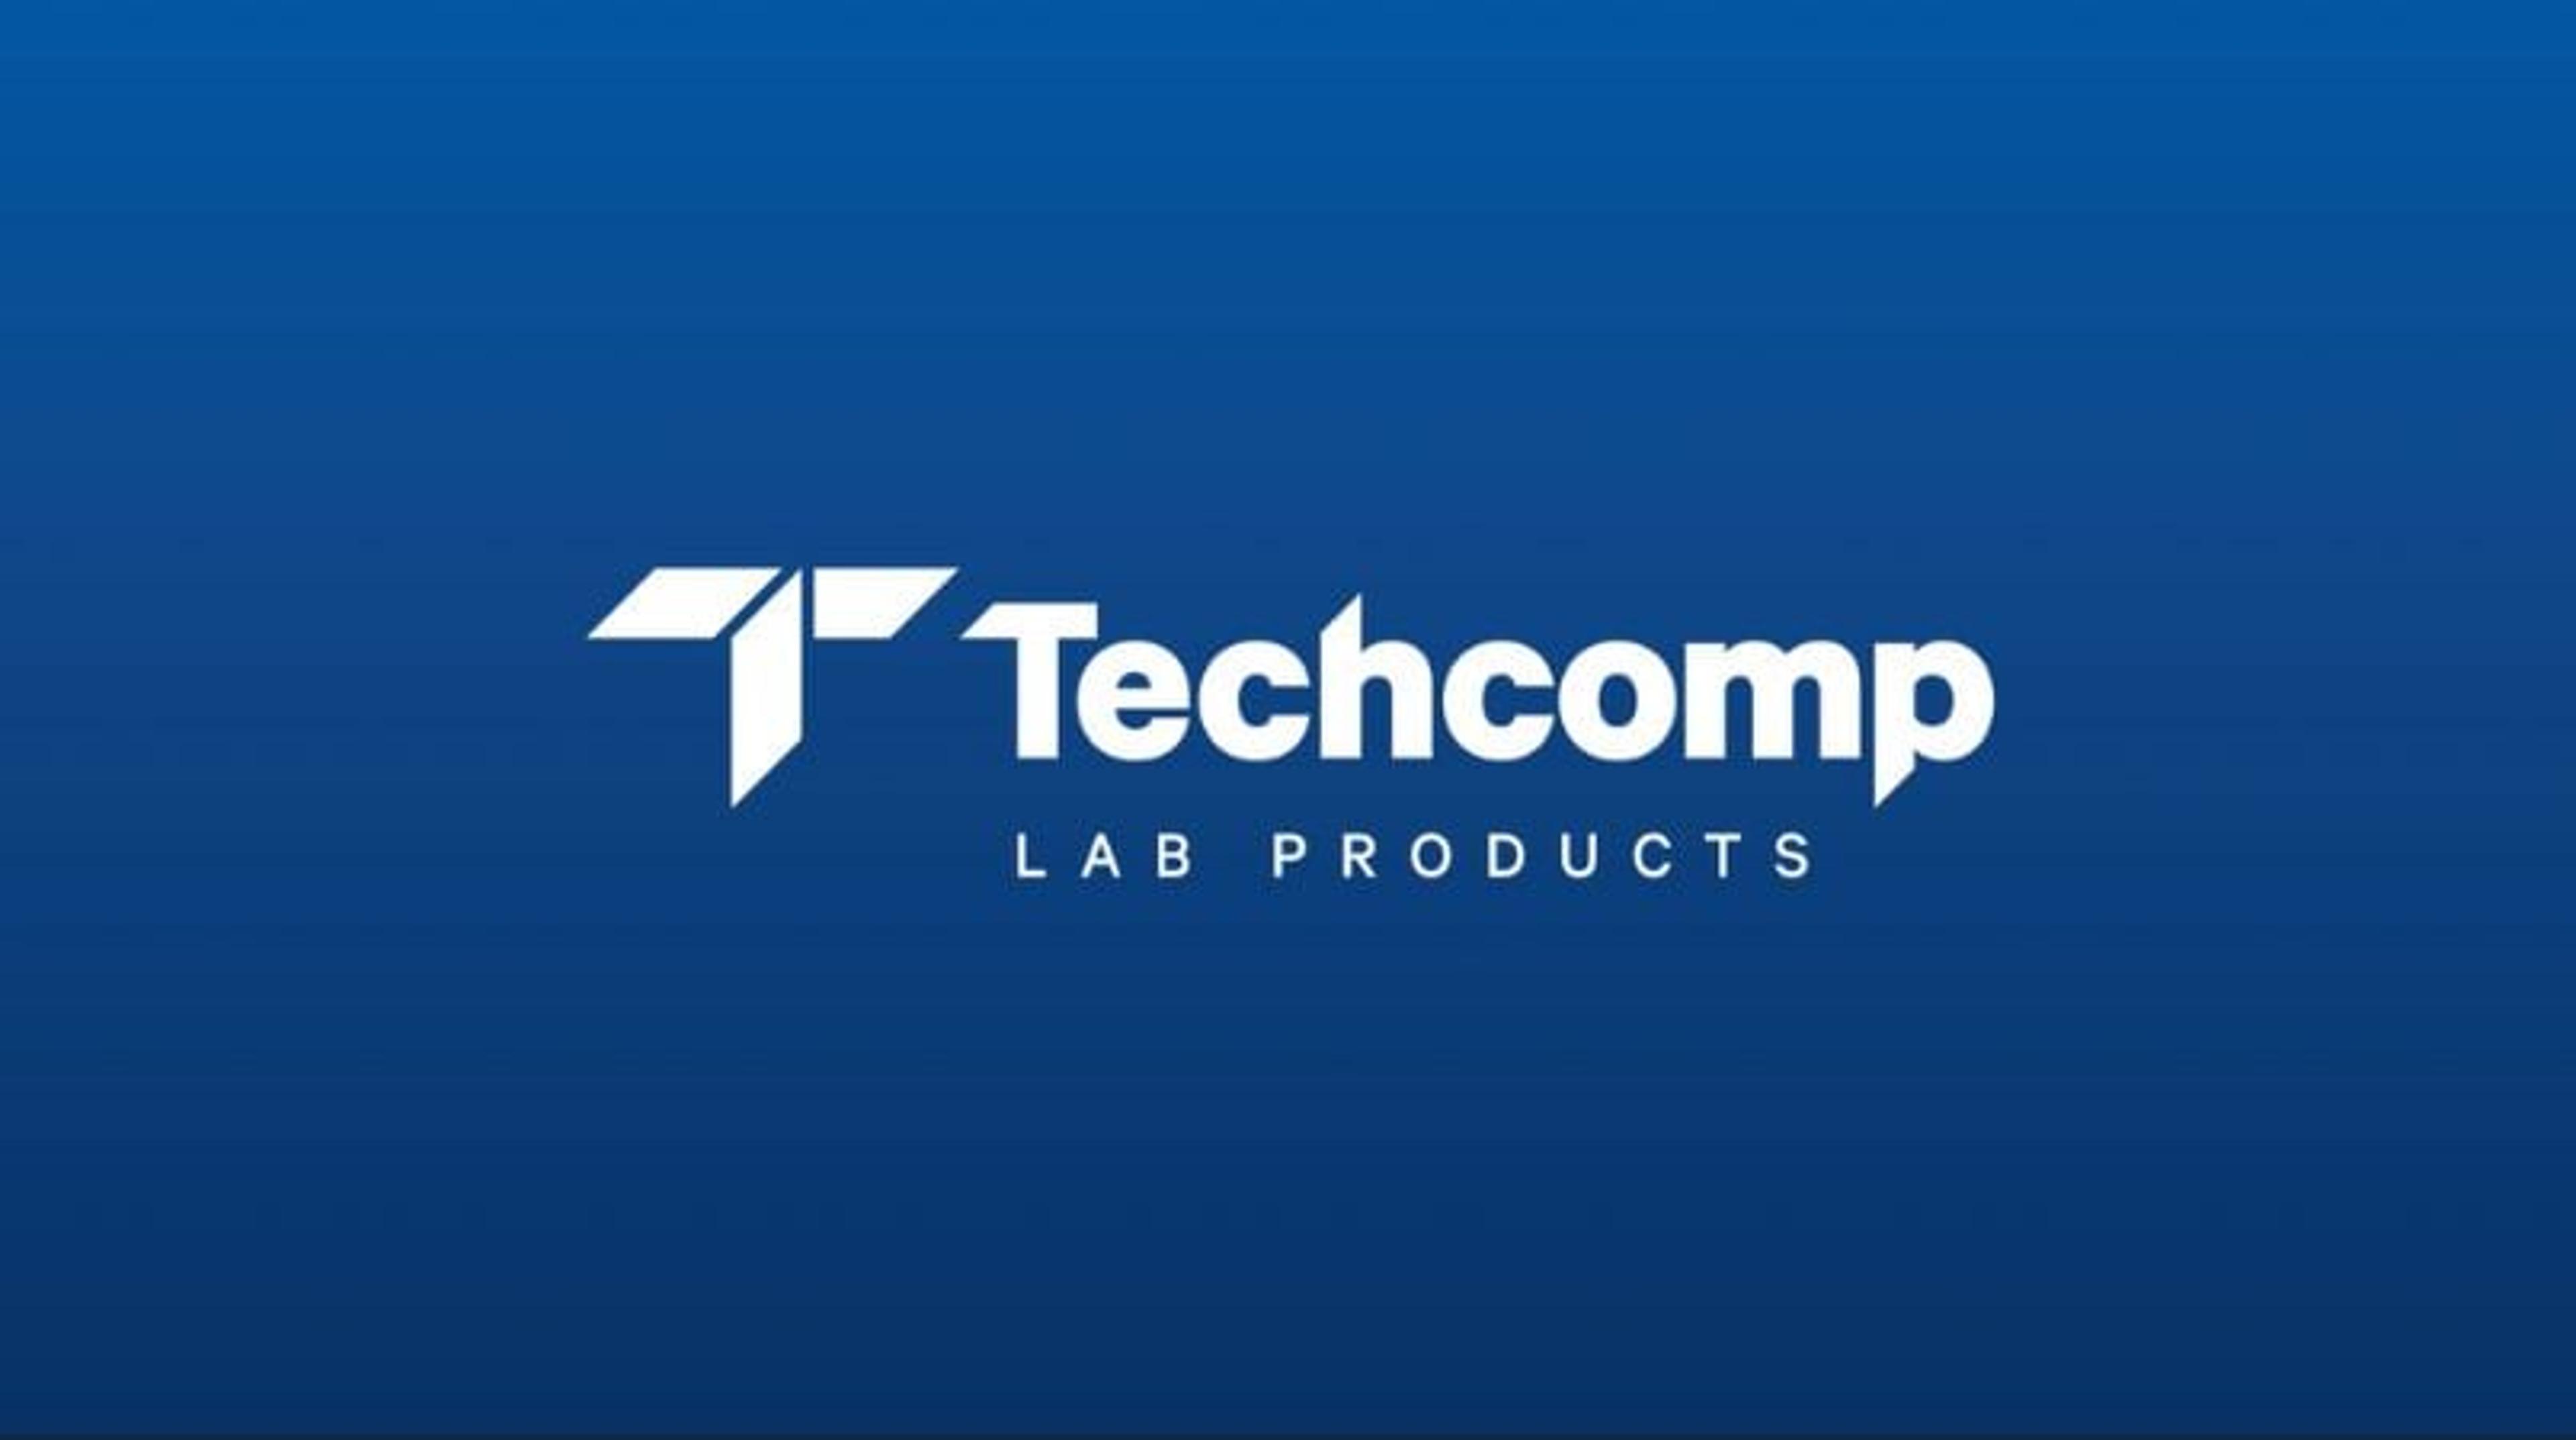 Techcomp showcases its latest laboratory equipment 